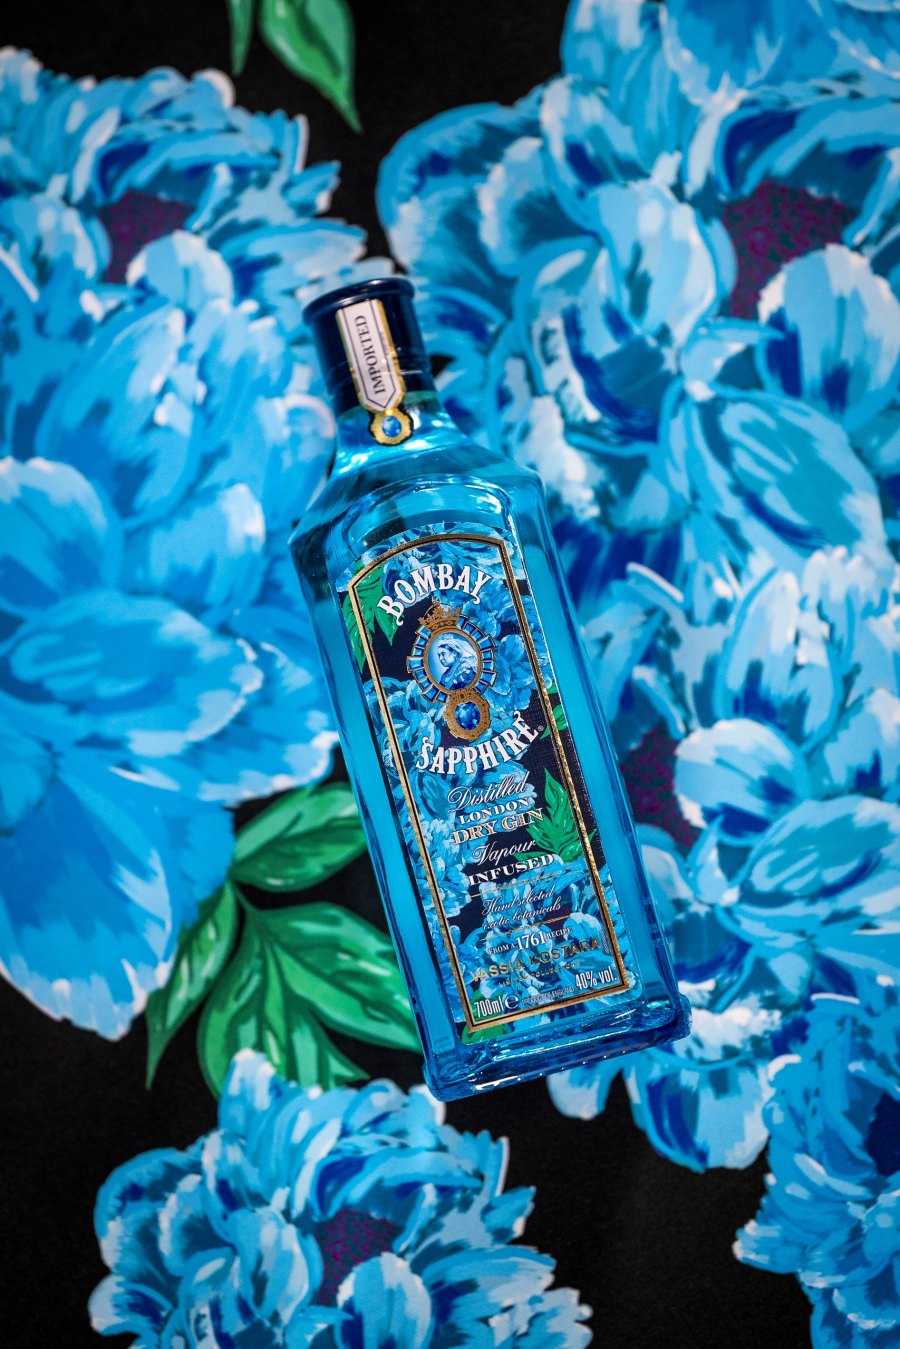 Bombay Sapphire x Vassia Kostara: Η πιο δημιουργική συνεργασία των γιορτών κλείστηκε σε ένα μπουκάλι